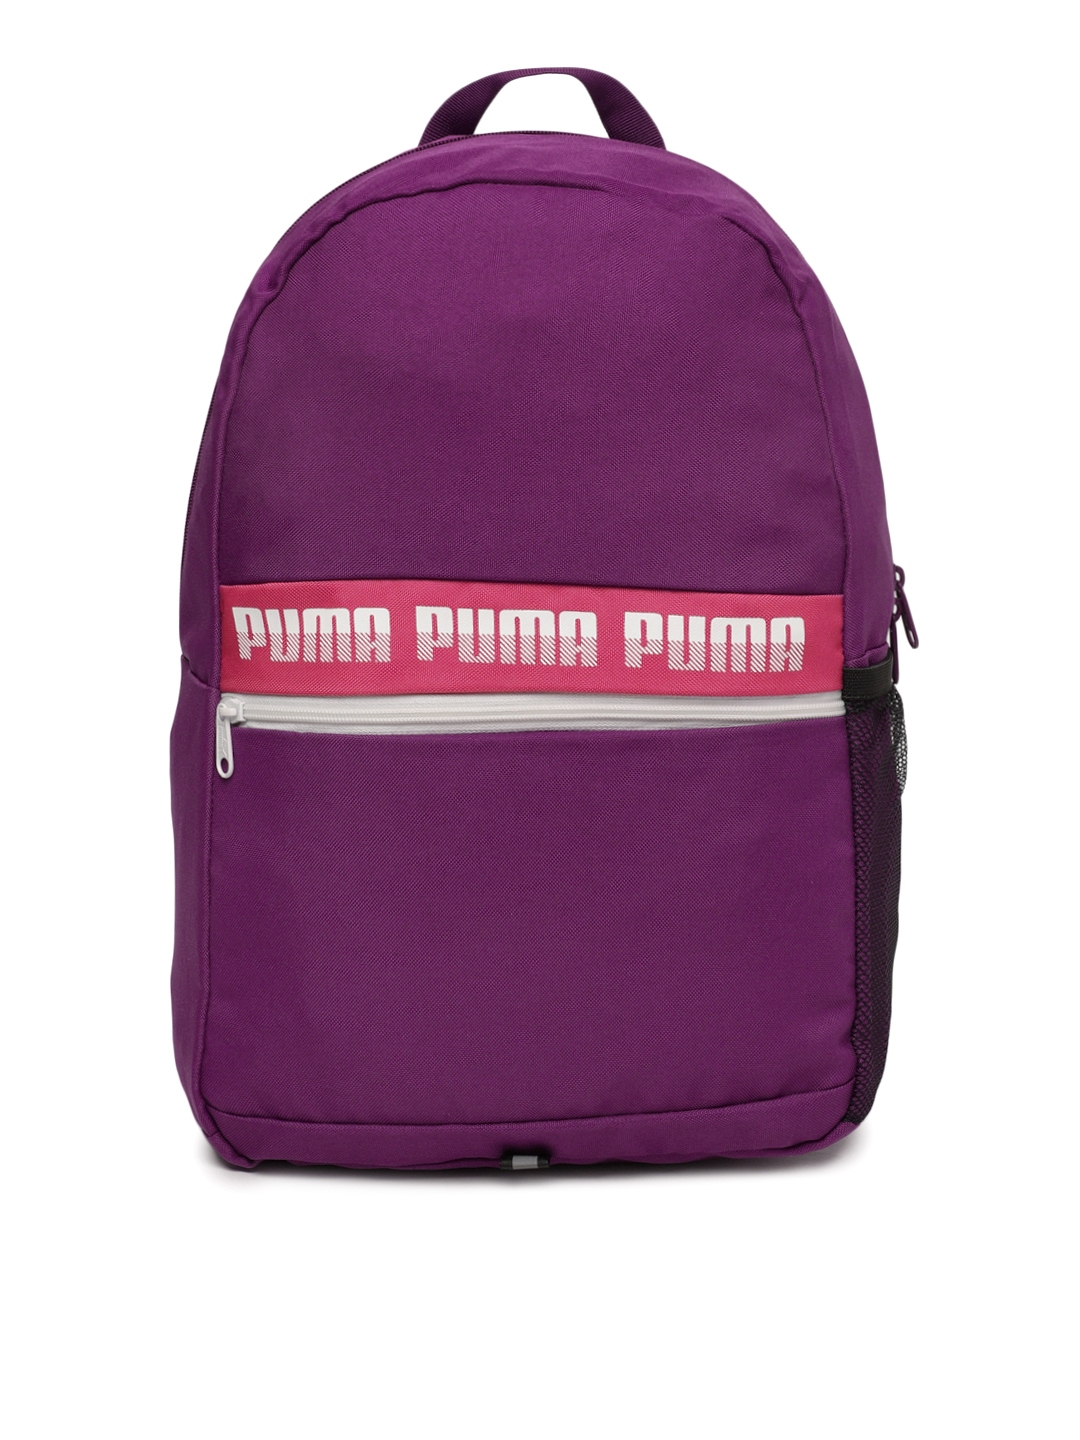 puma bags purple